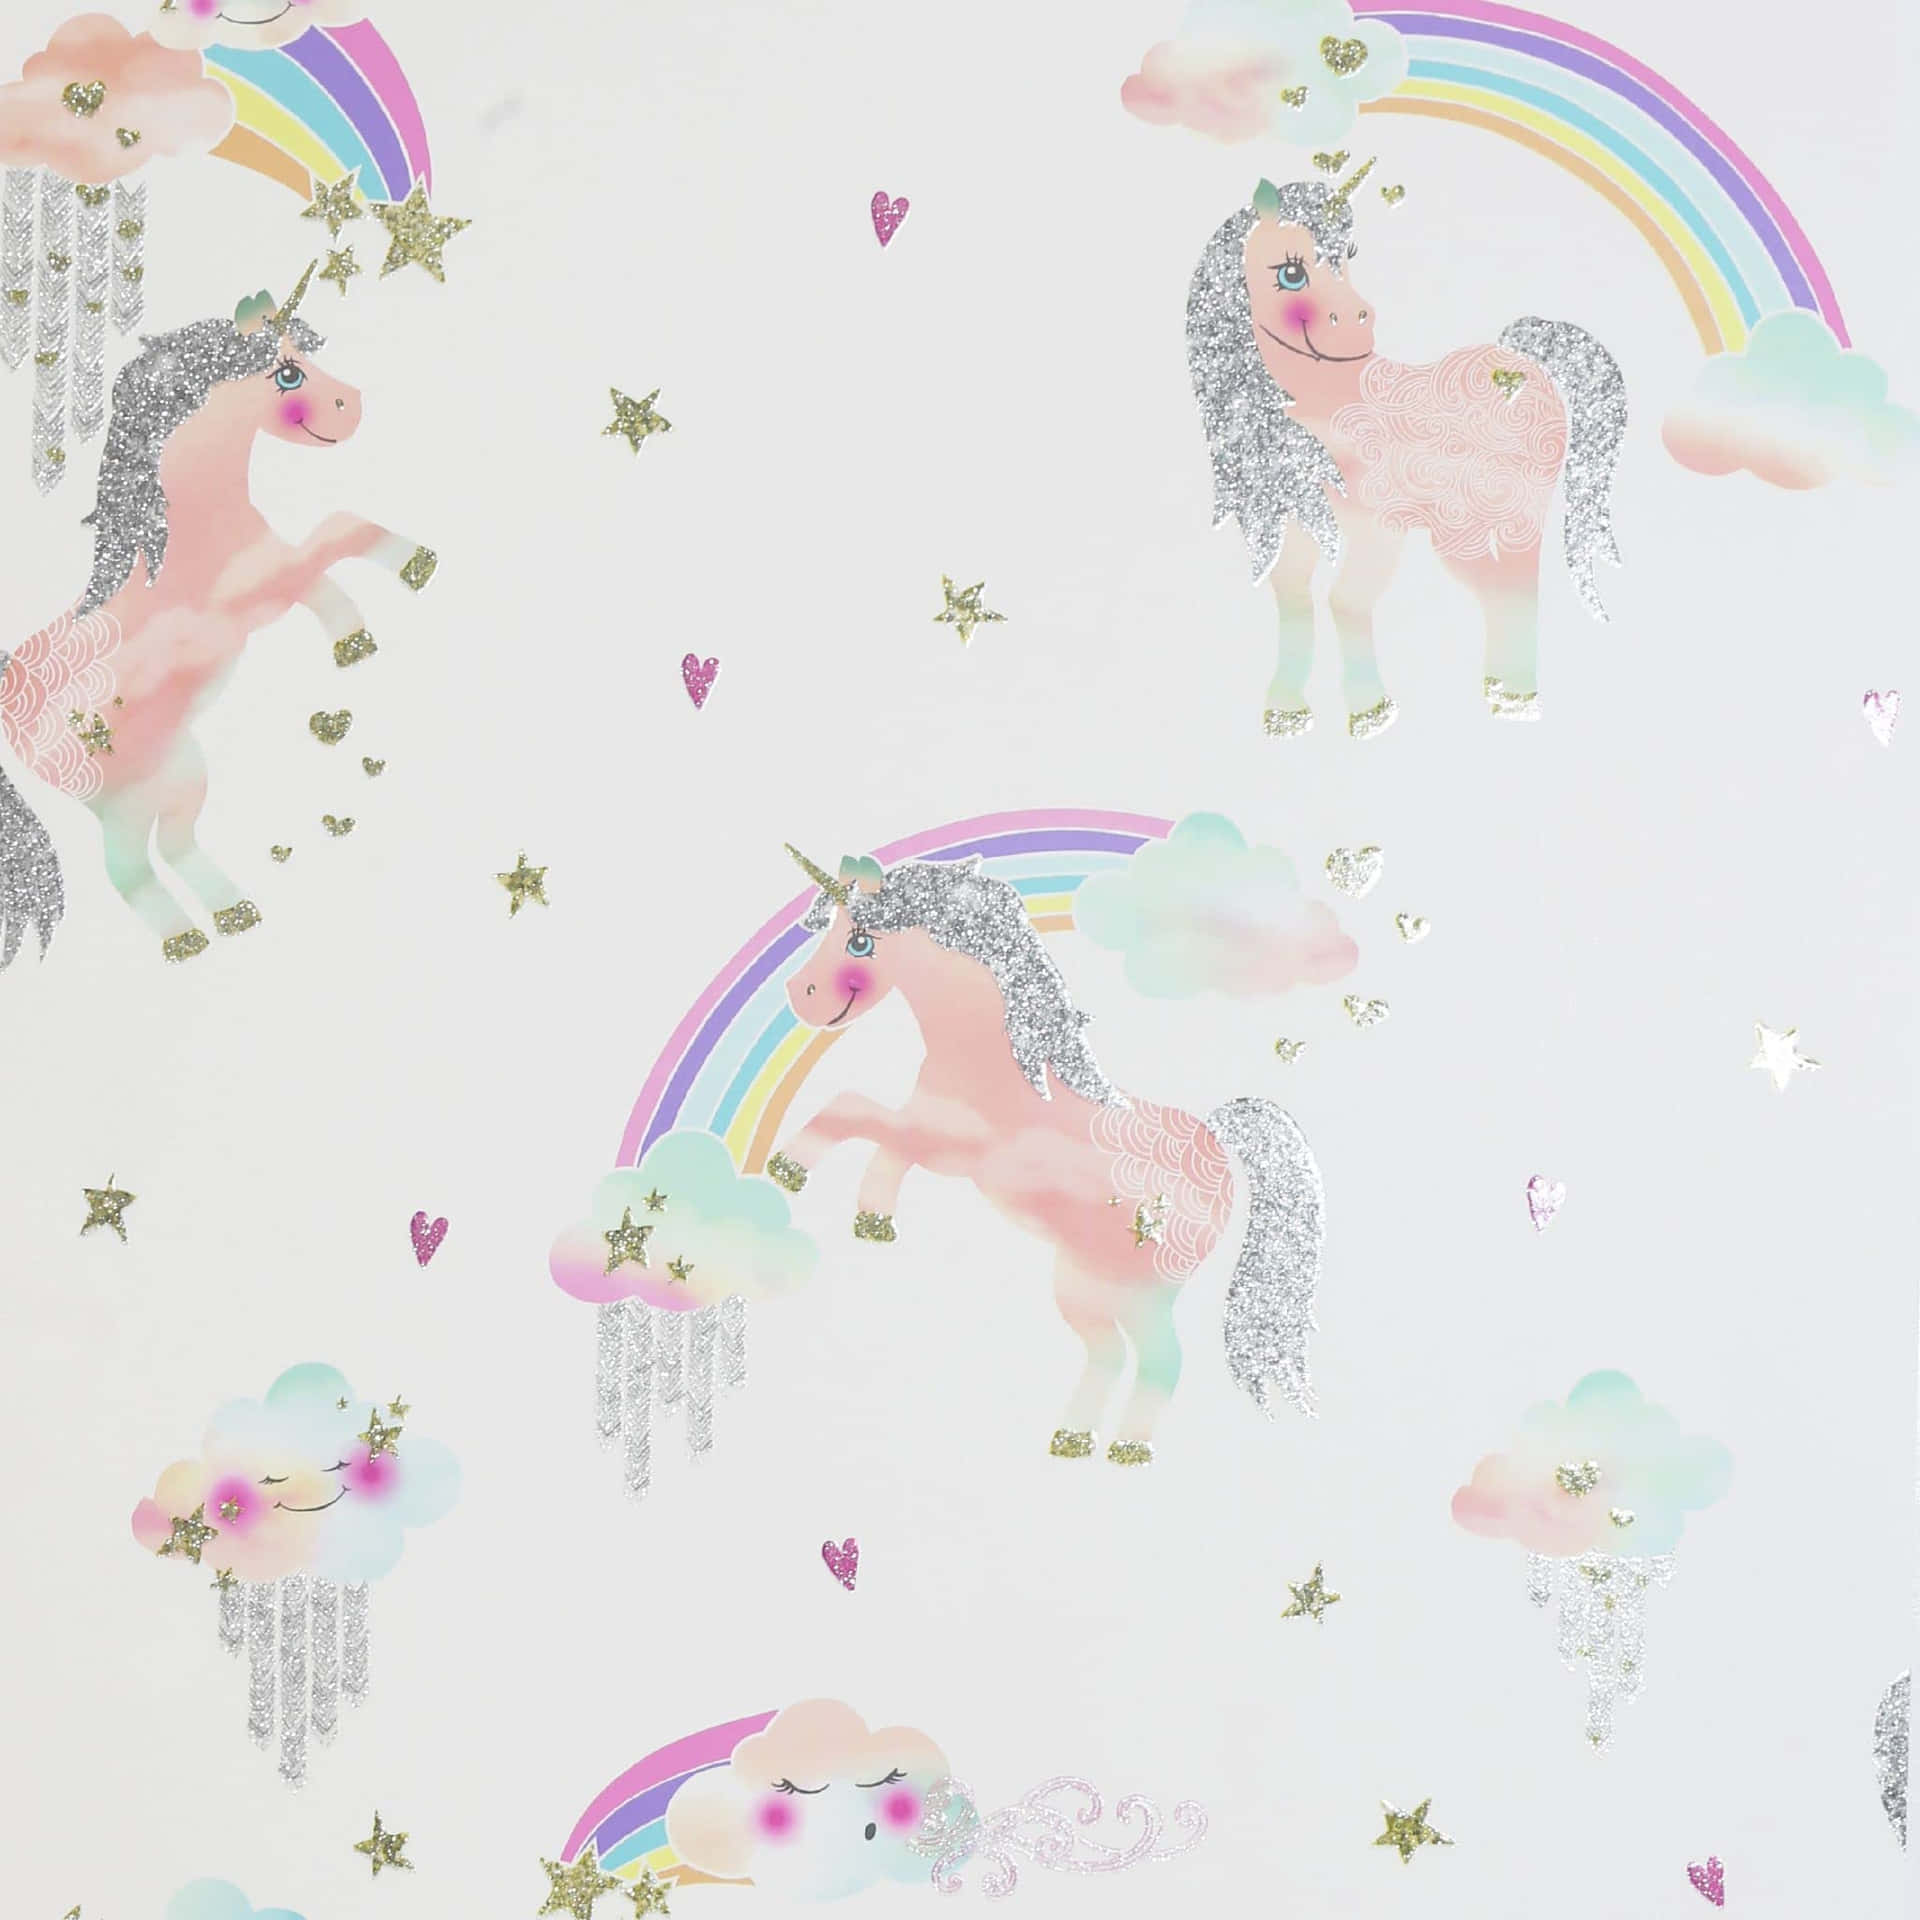 "Beautiful Pastel Unicorn with Glittery Horn"